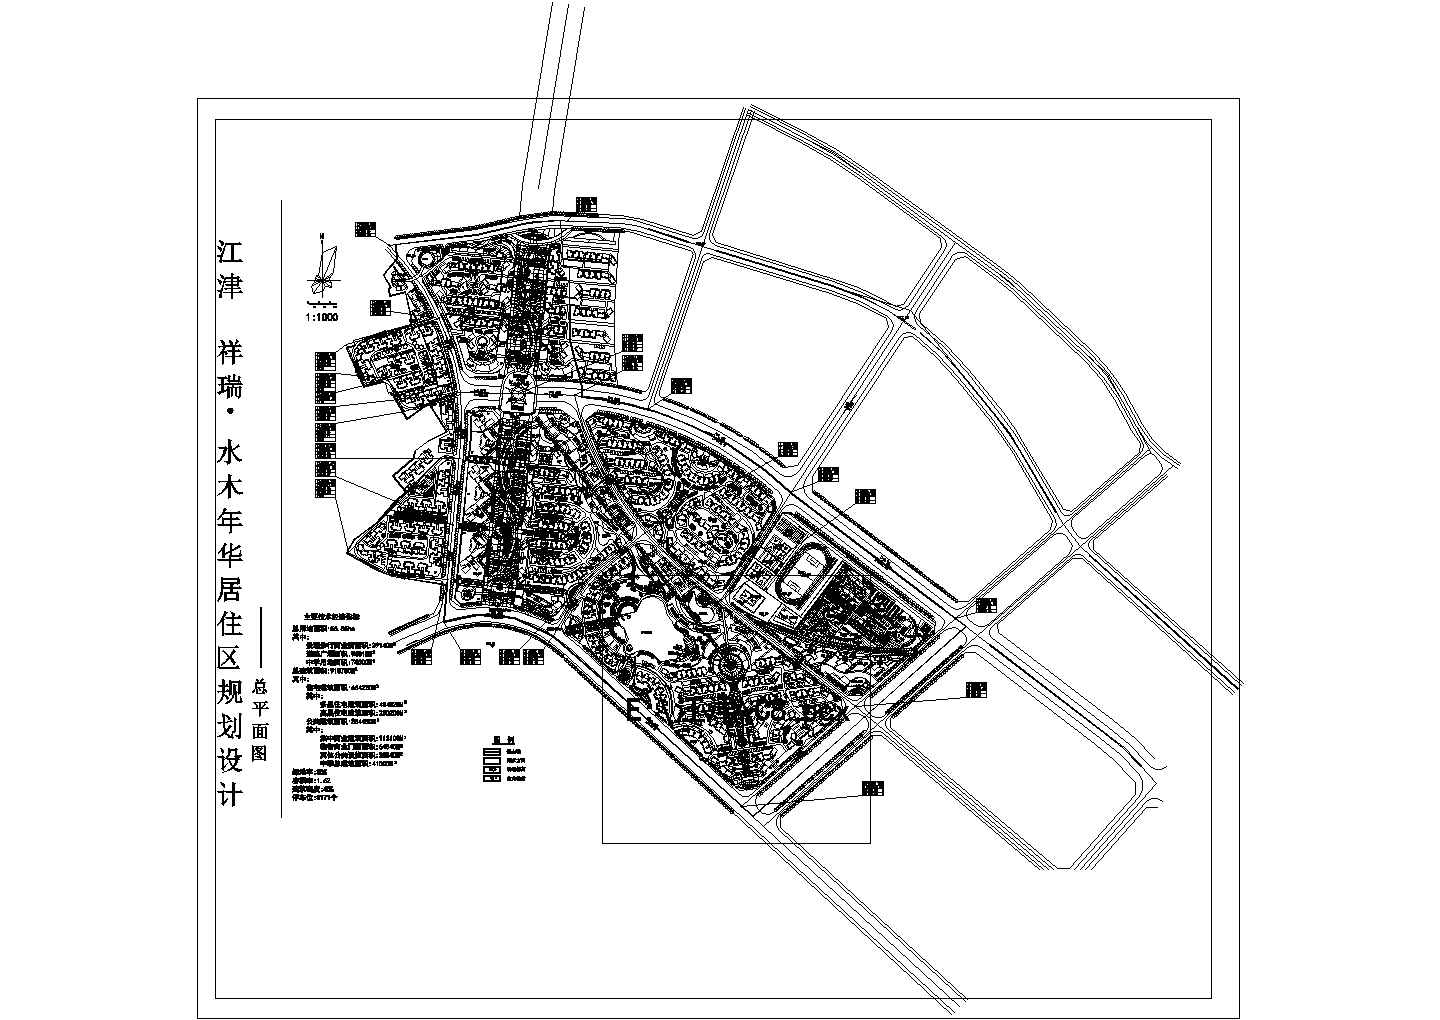 56.55ha大型居住区规划设计图